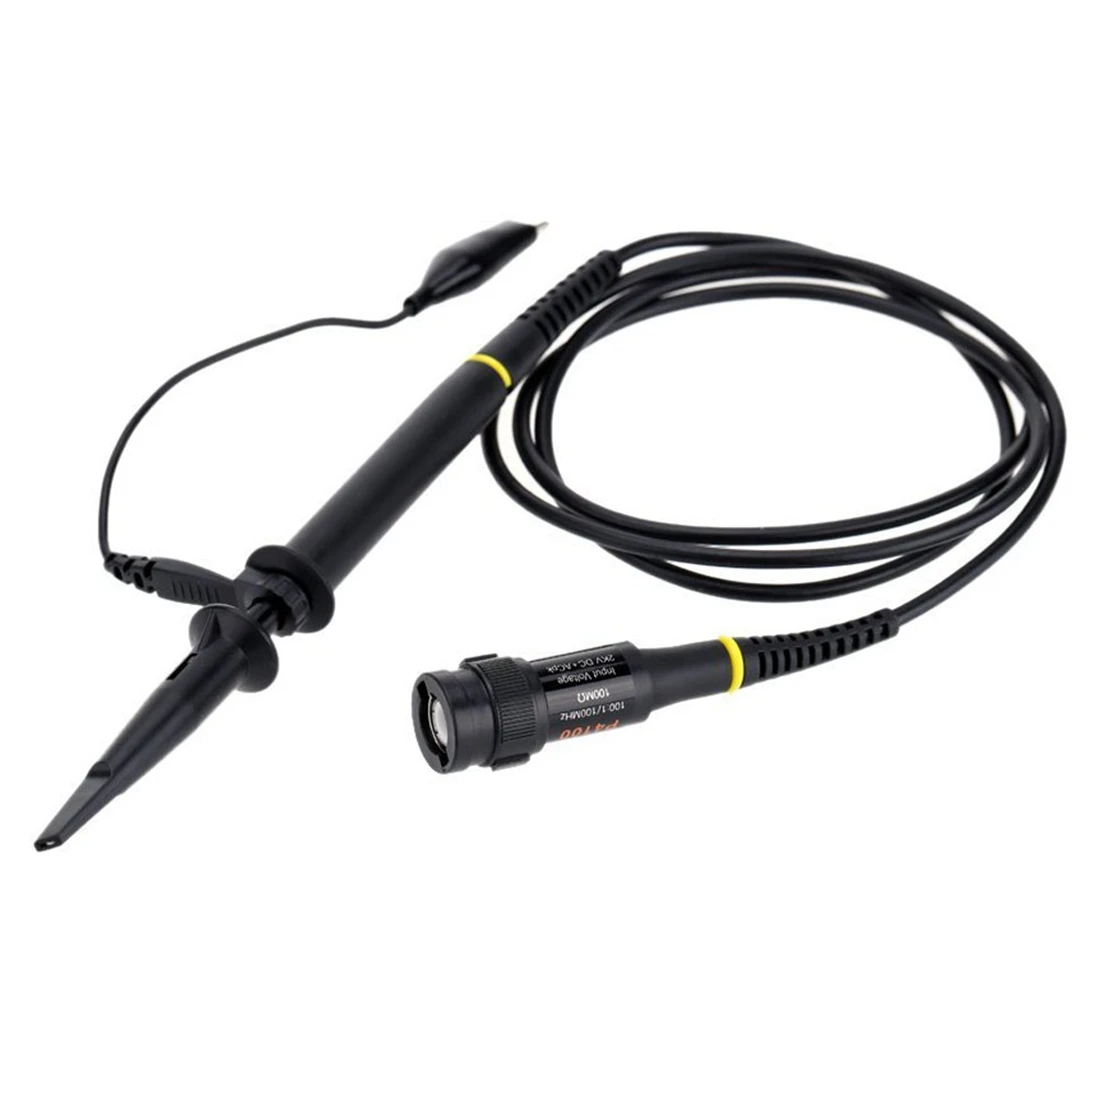 P4100 High Voltage Oscilloscope Probe 2KV 100: 1 100 MHz alligator clip Measuring tip